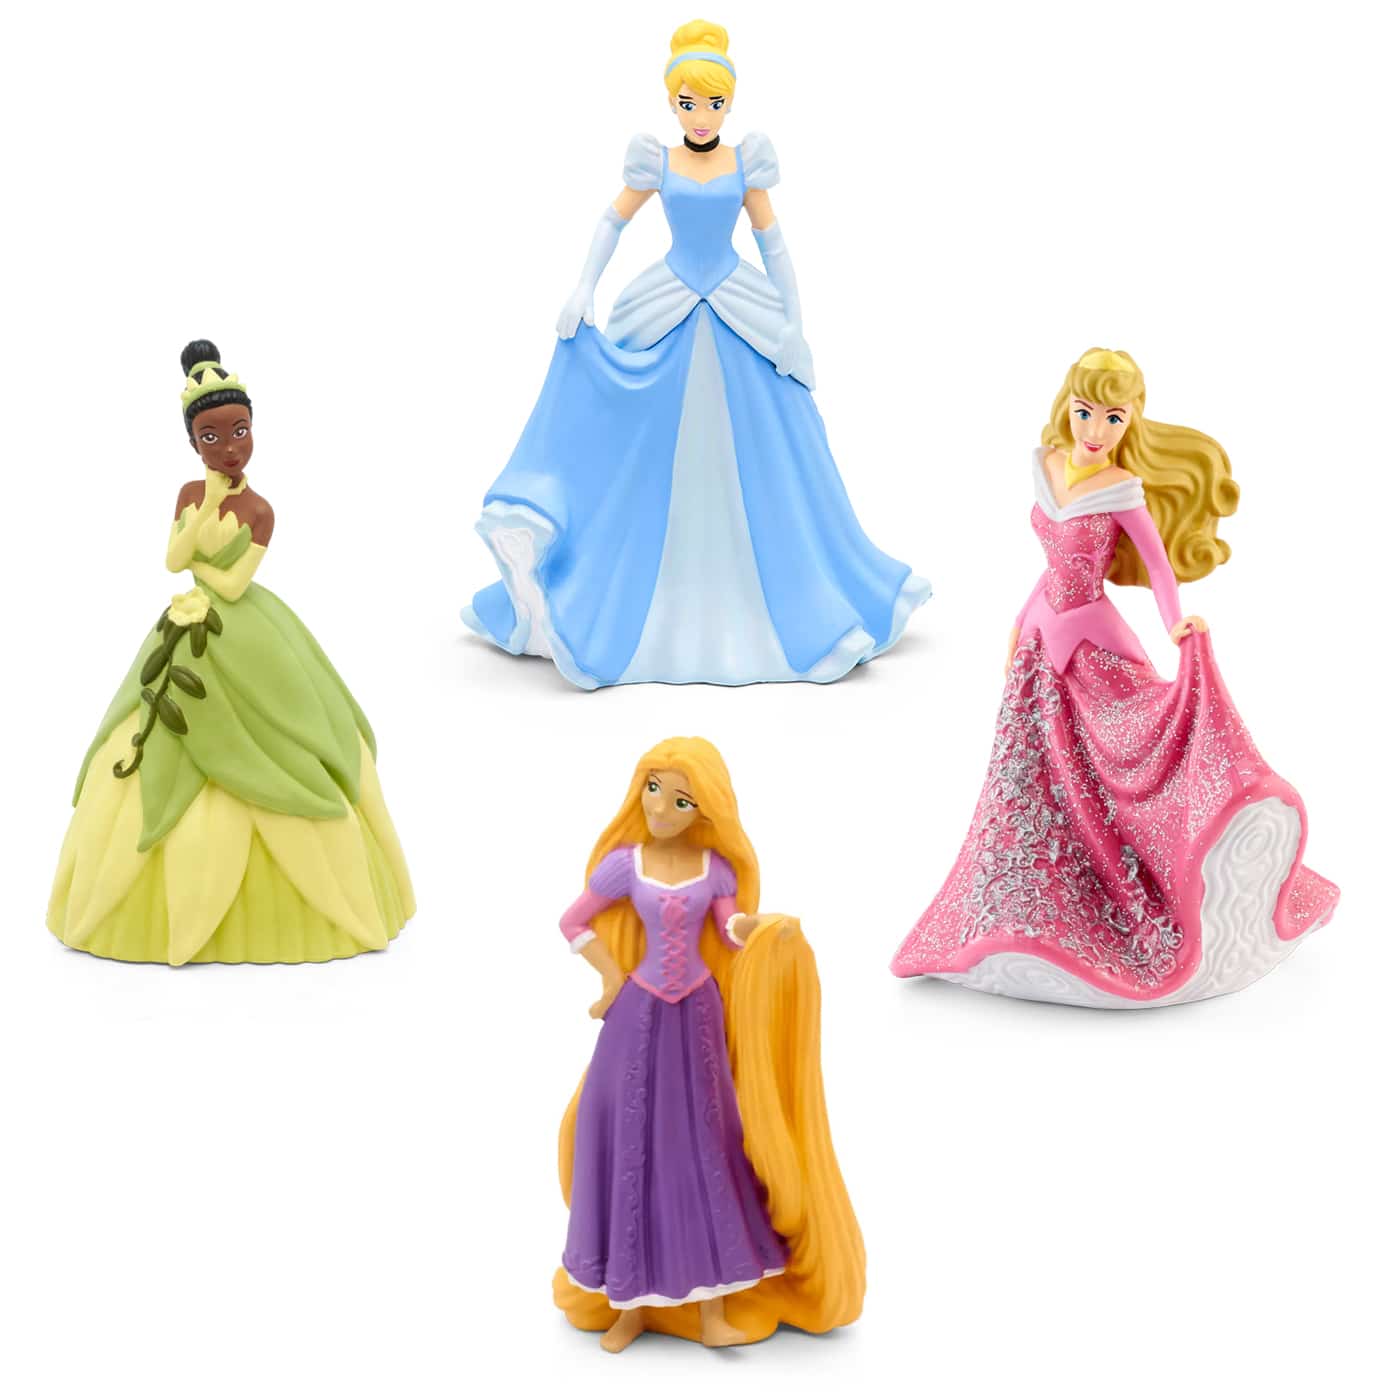 Tonies - Disney Princess Bundle: Princess and the Frog / Sleeping Beauty / Rapunzel / Cinderella